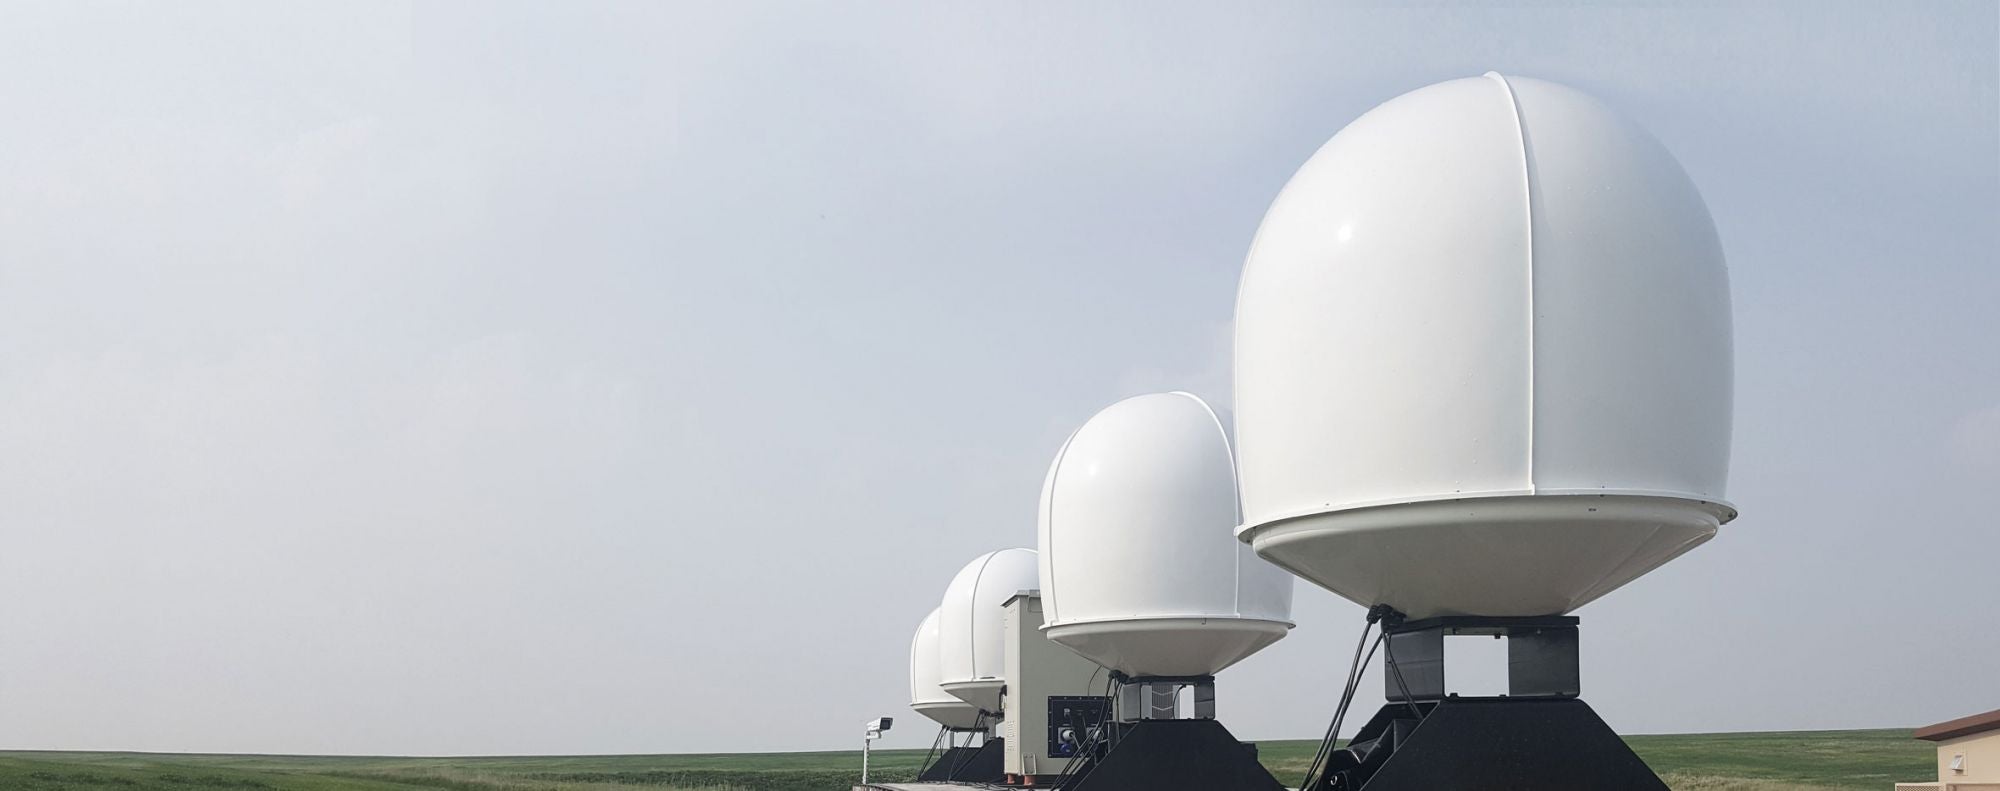 Ground station antennas for Low orbit Satellite networks